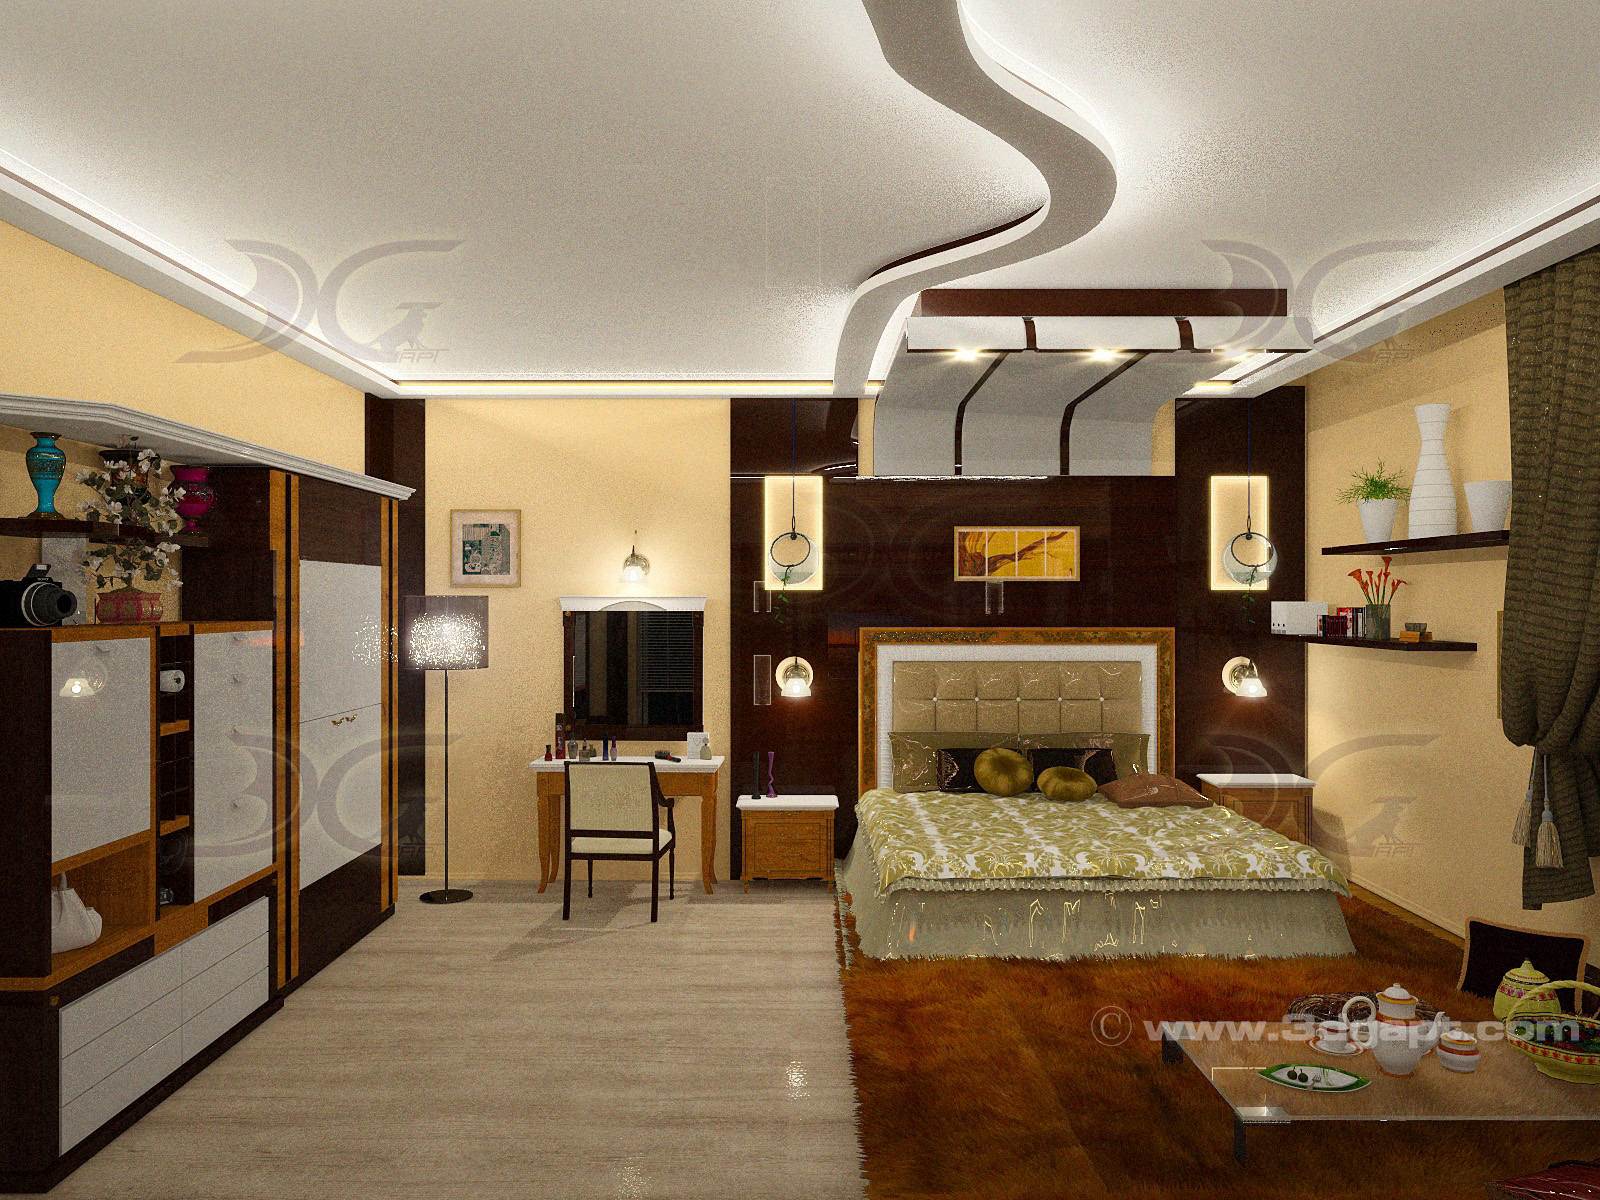 architecture interior hotel room33